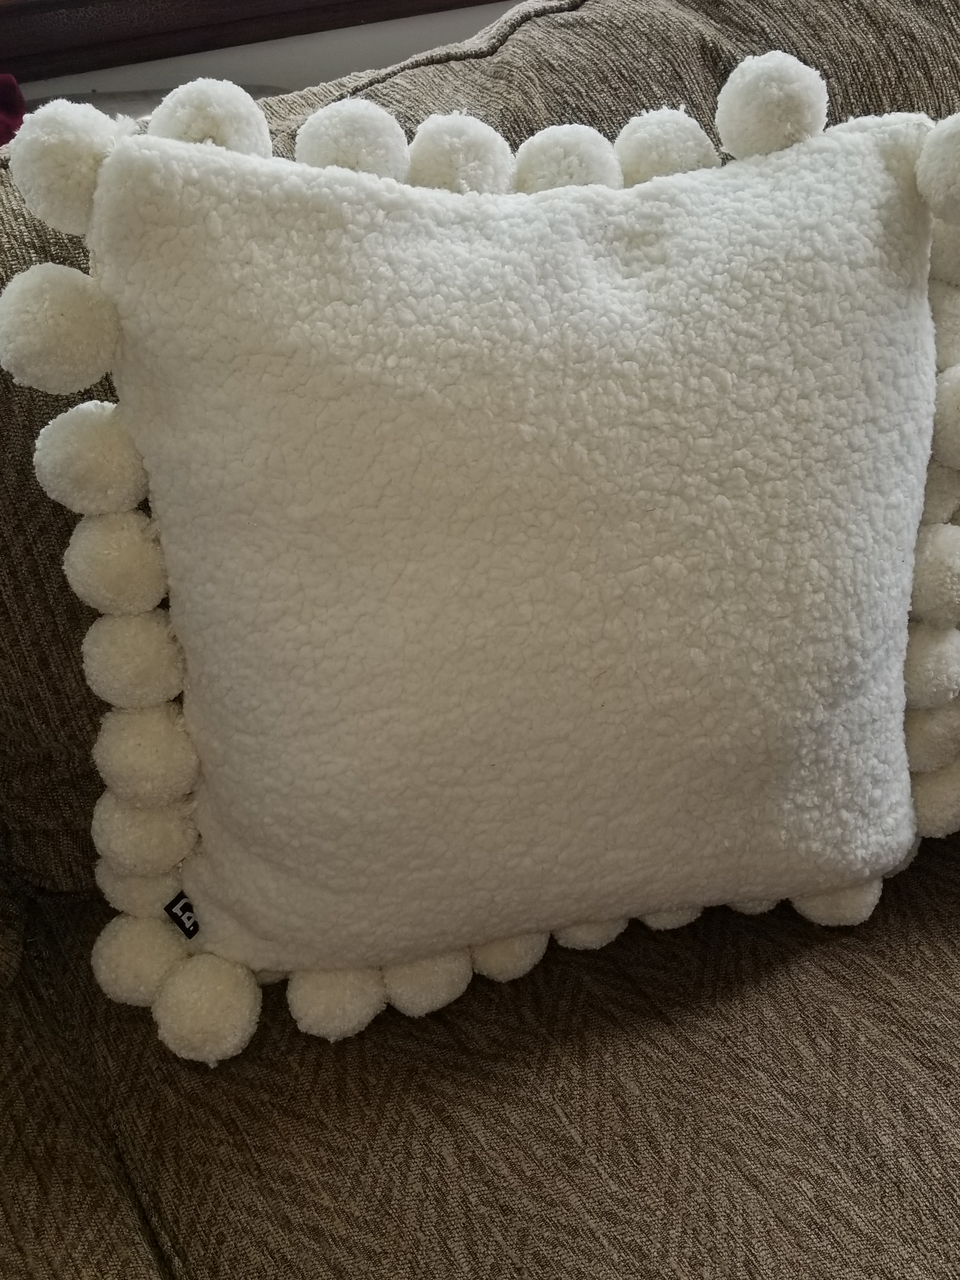 cream sherpa fleece jumbo pom pom pillow covers on a tan couch